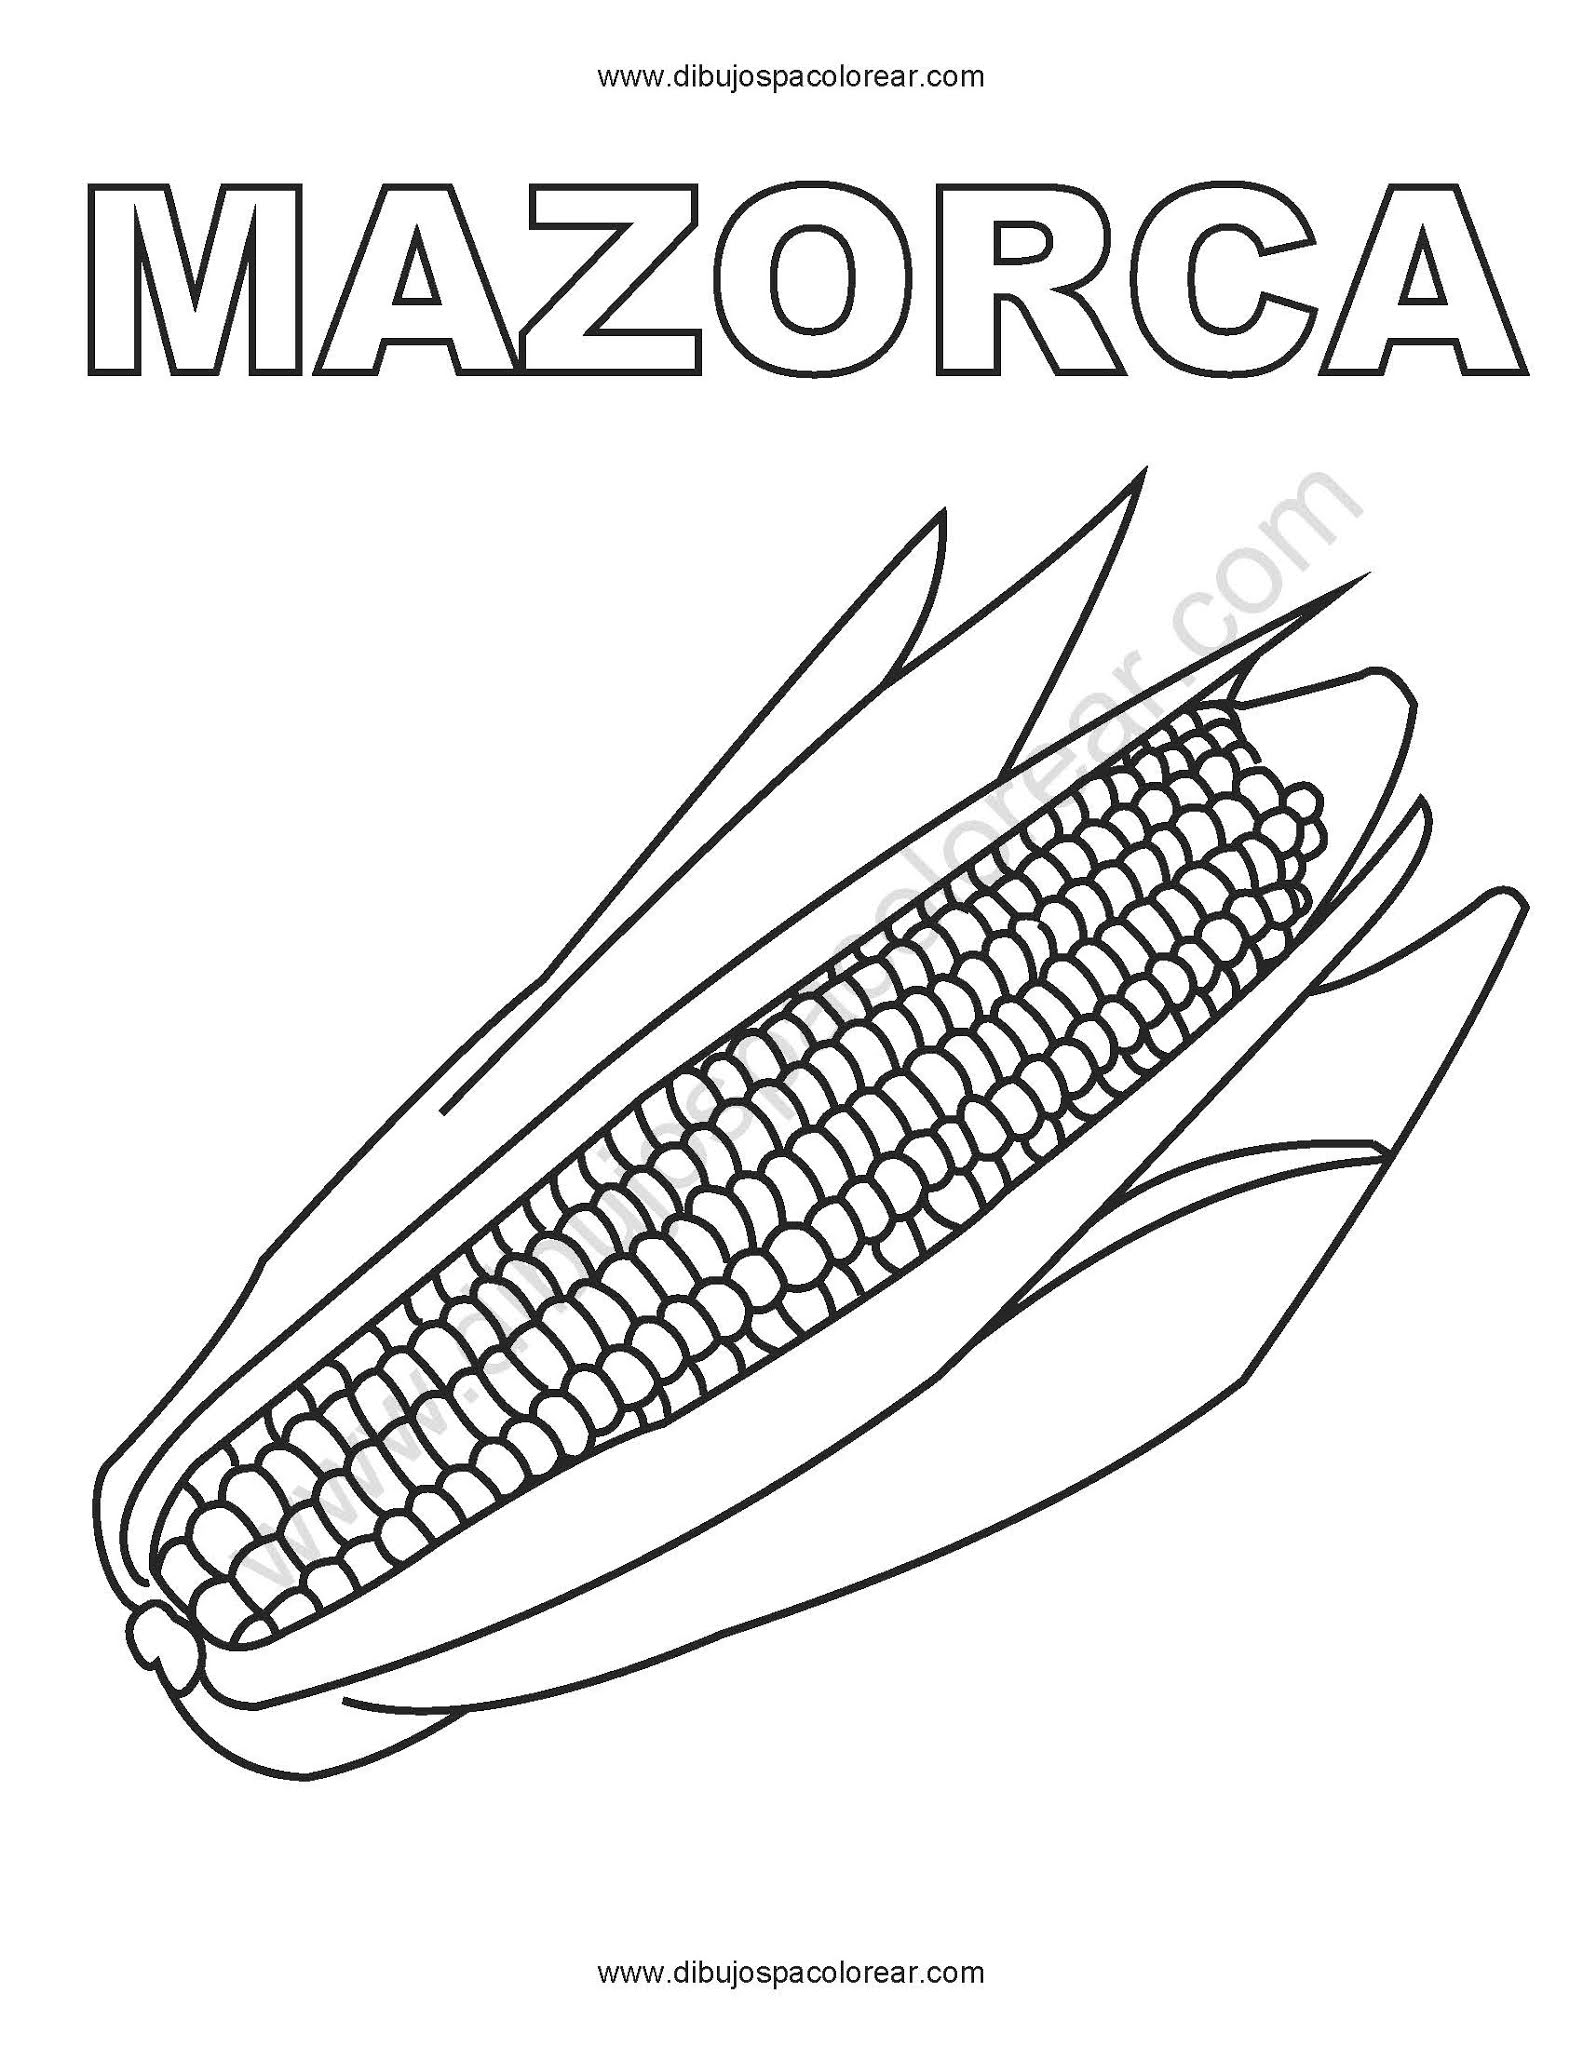 Dibujo para colorear Elote, mazorca, maíz, choclo, corn